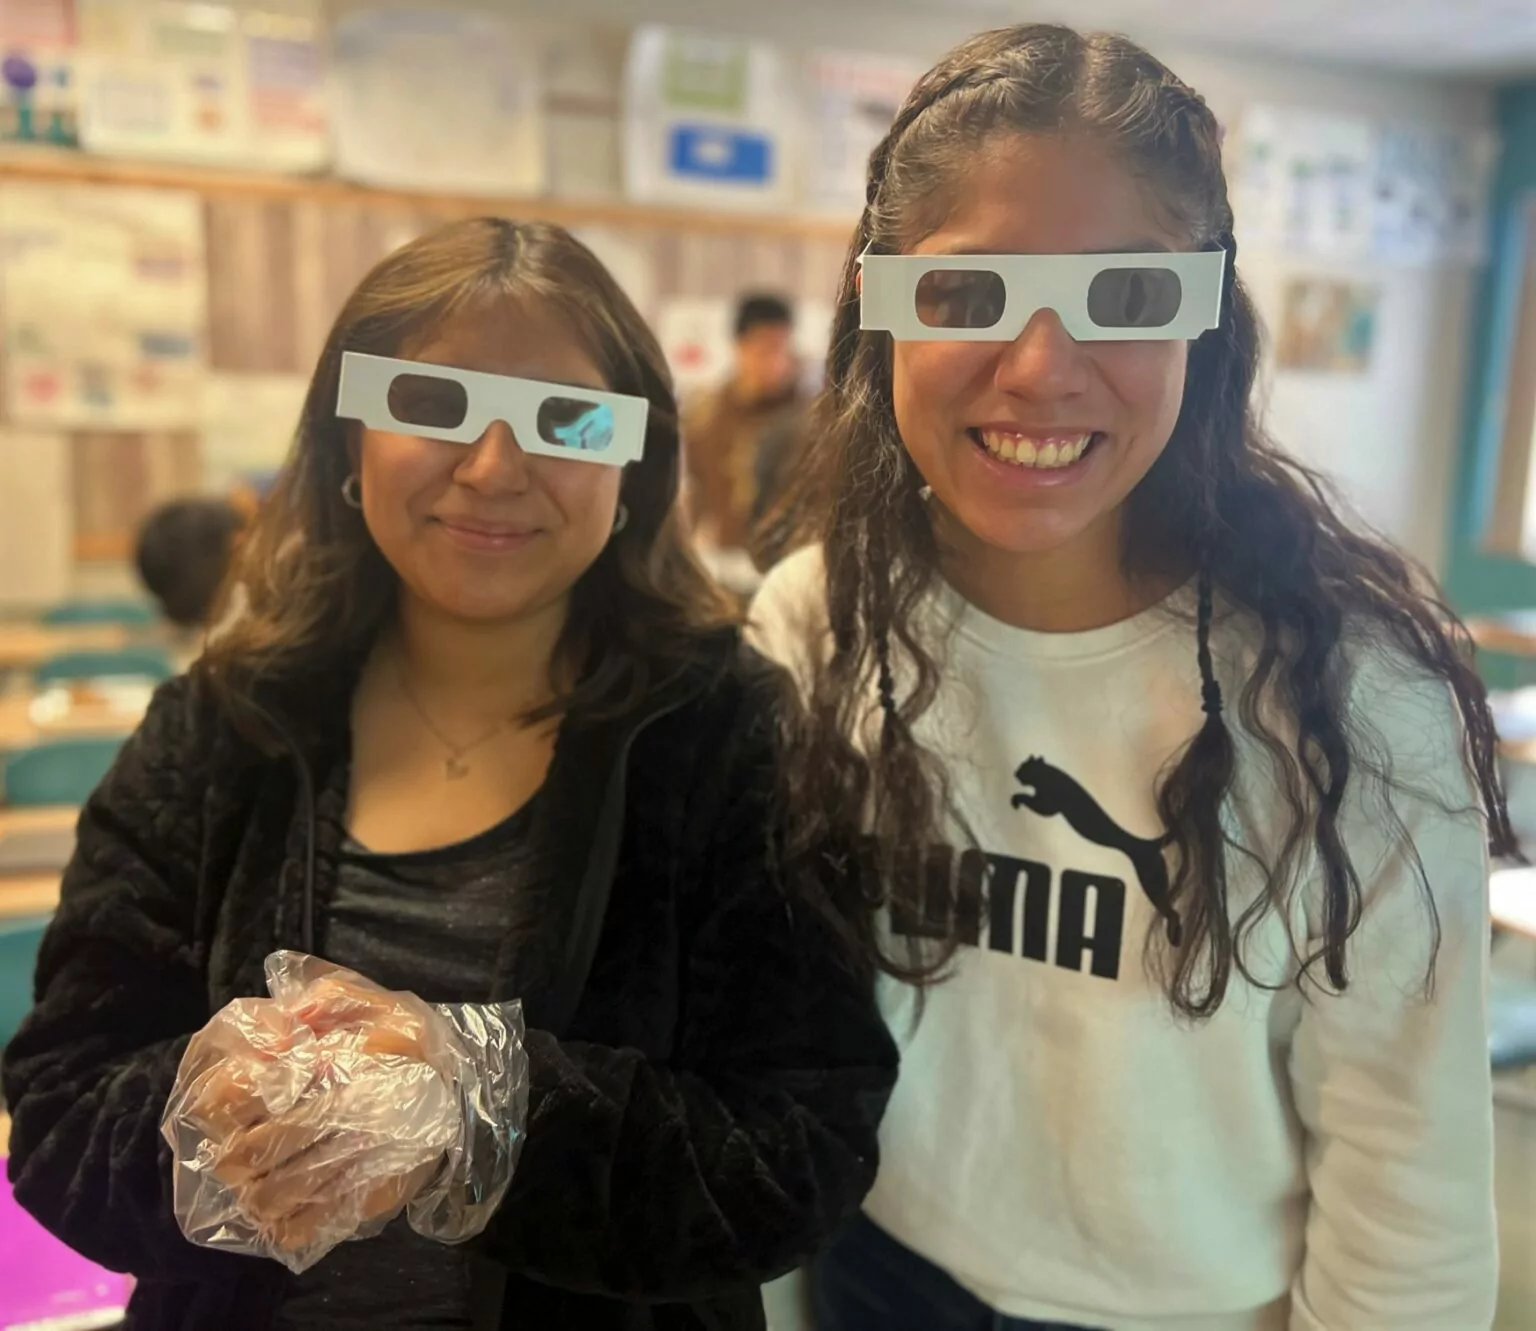 Two teenage girls wearing "cornea glasses" that distort vision.